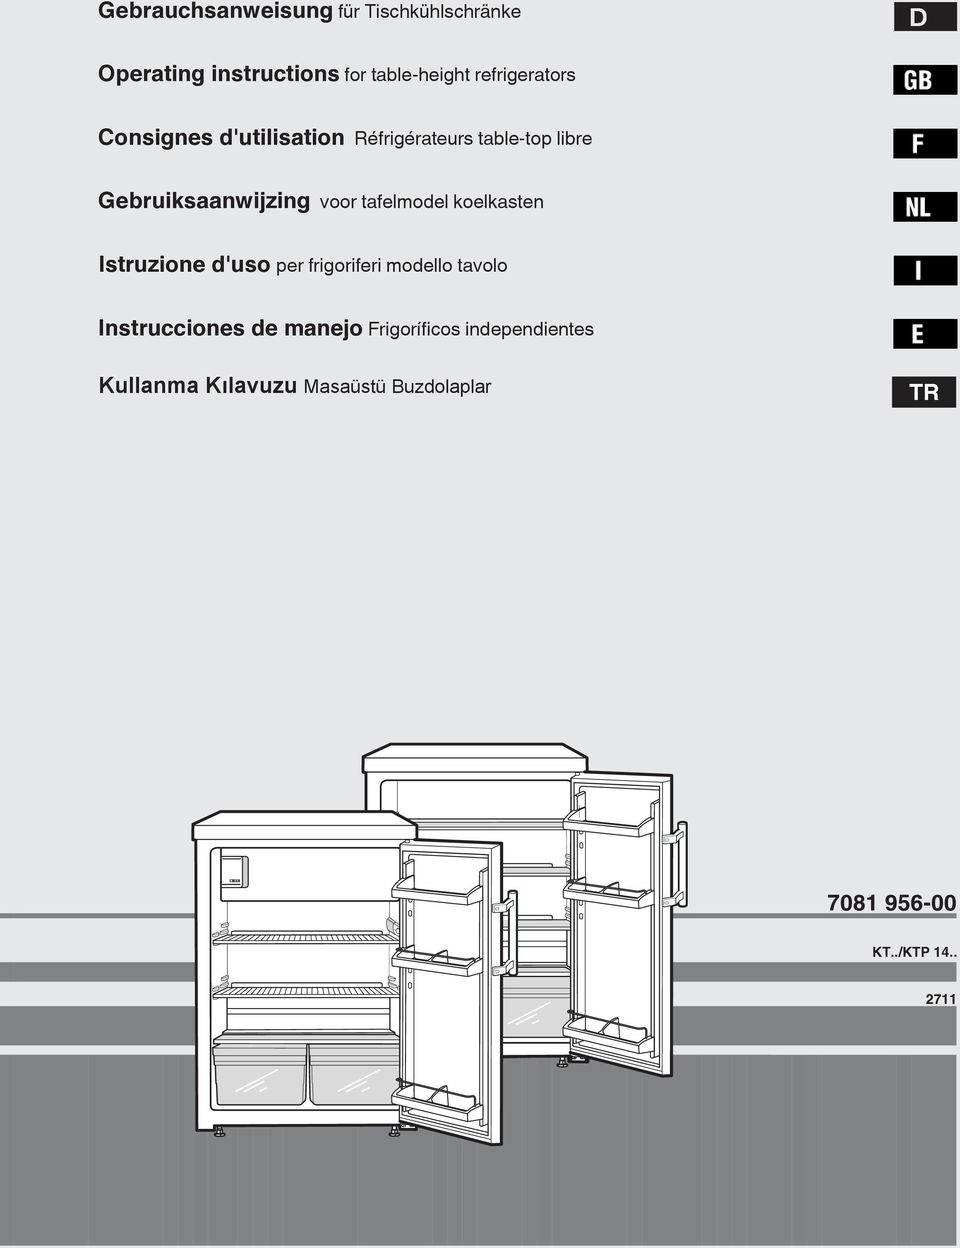 tafelmodel koelkasten Istruzione d'uso per frigoriferi modello tavolo Instrucciones de